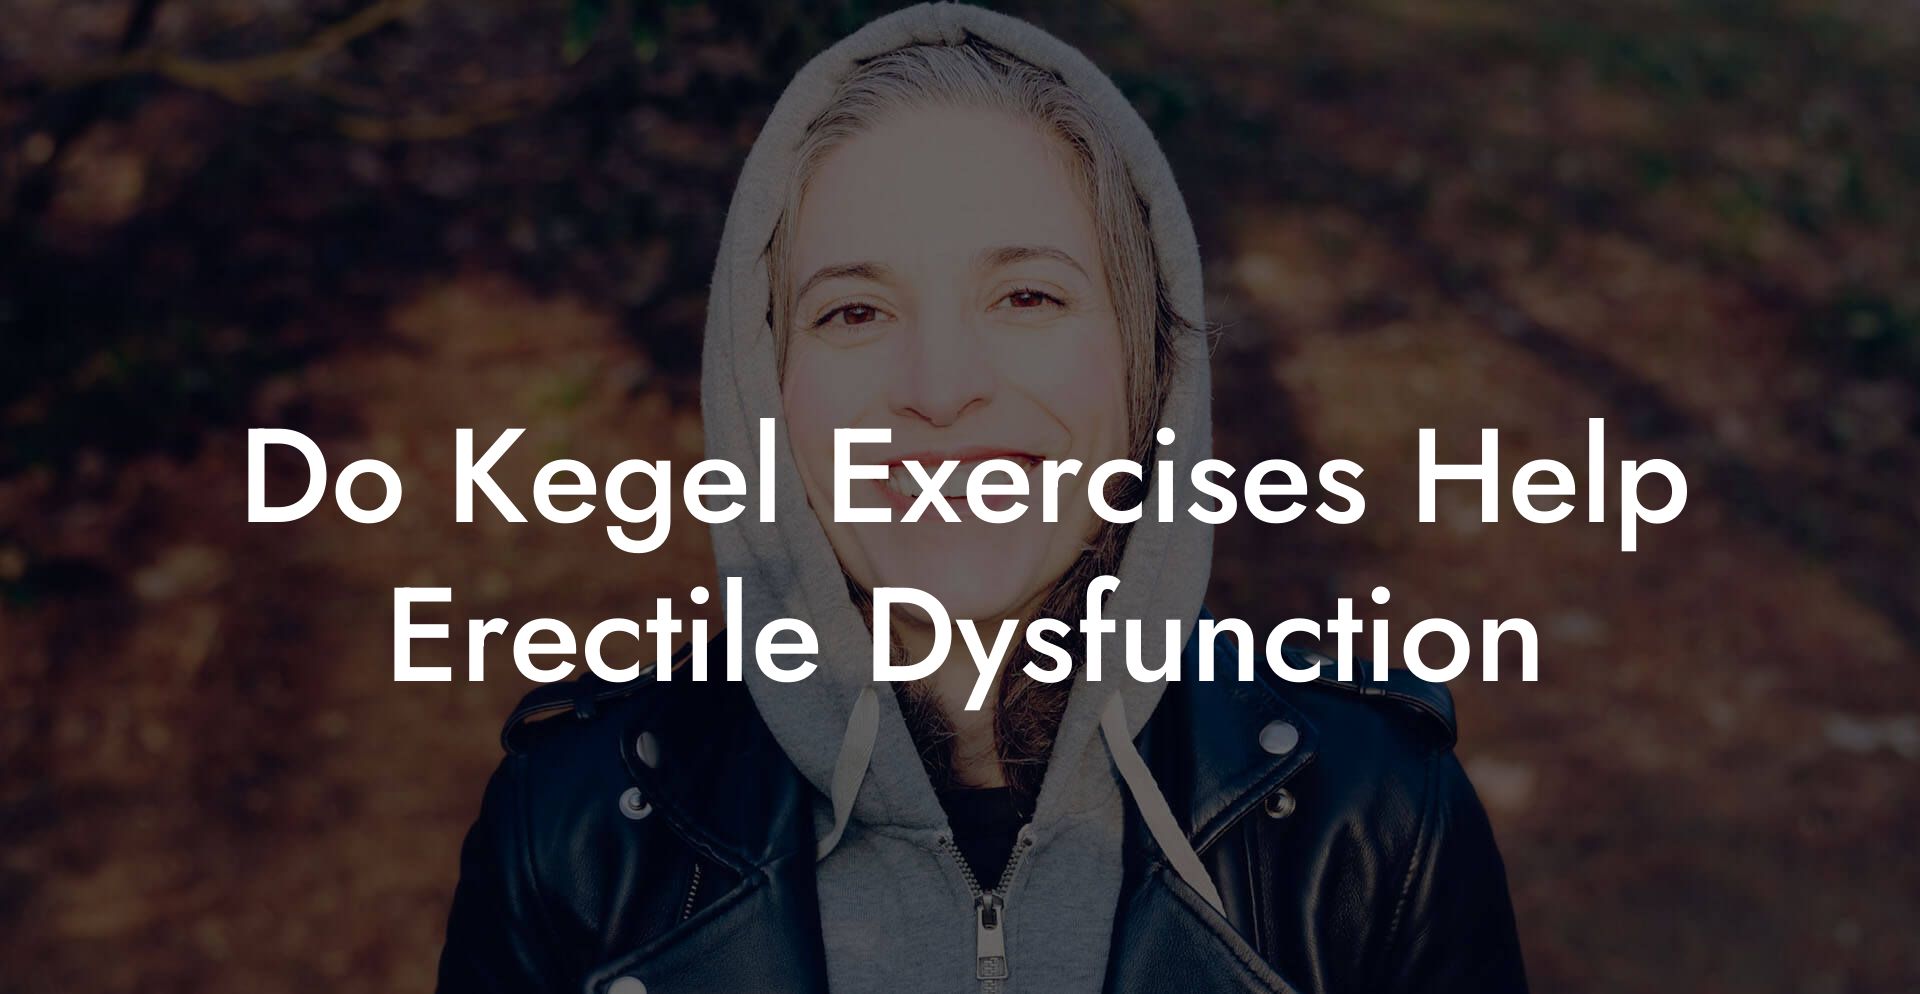 Do Kegel Exercises Help Erectile Dysfunction